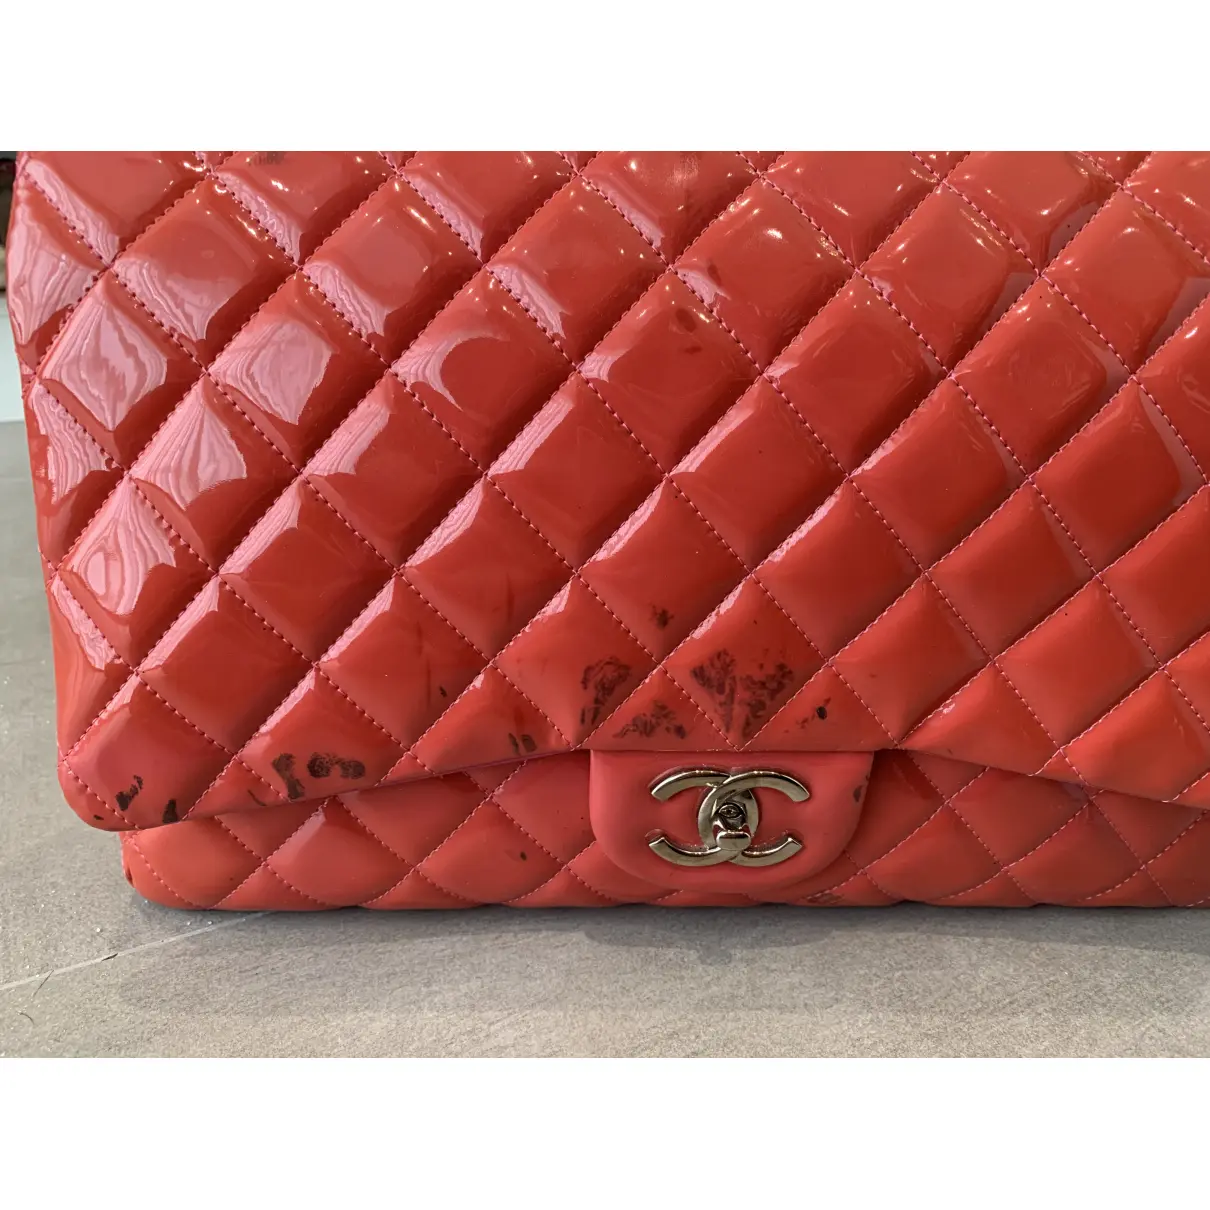 Timeless/Classique patent leather handbag Chanel